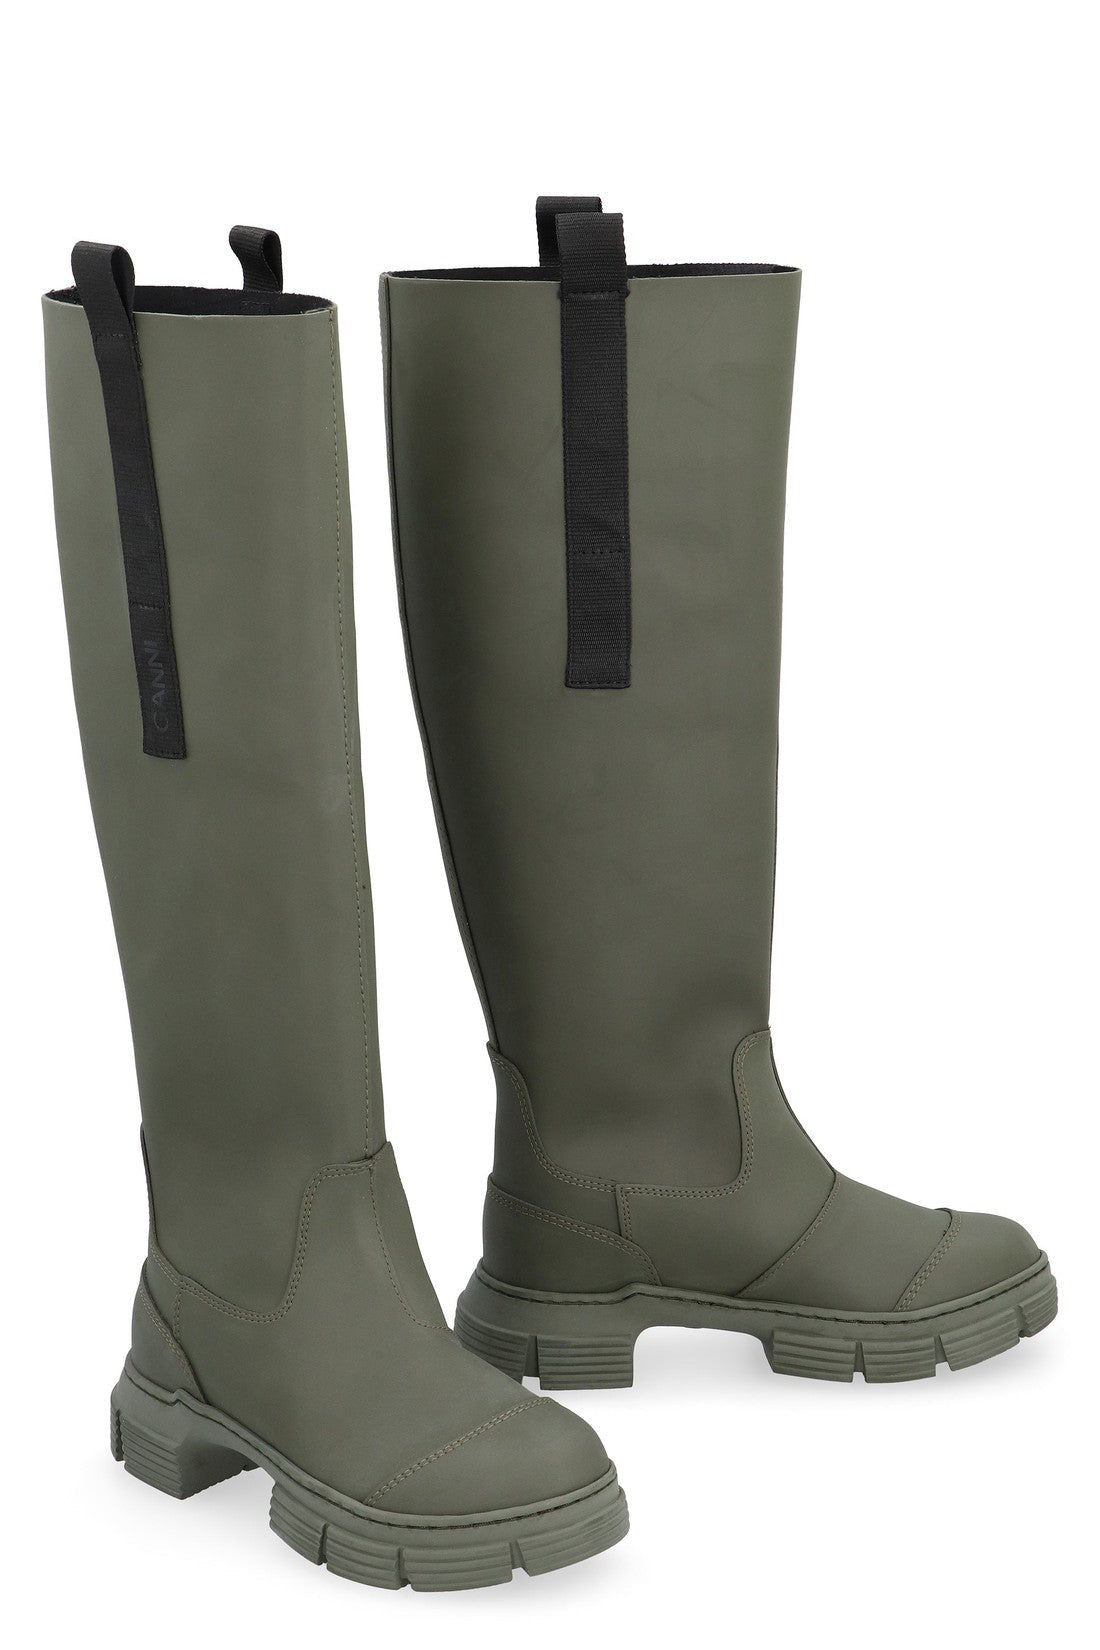 GANNI-OUTLET-SALE-Country rubber boots-ARCHIVIST